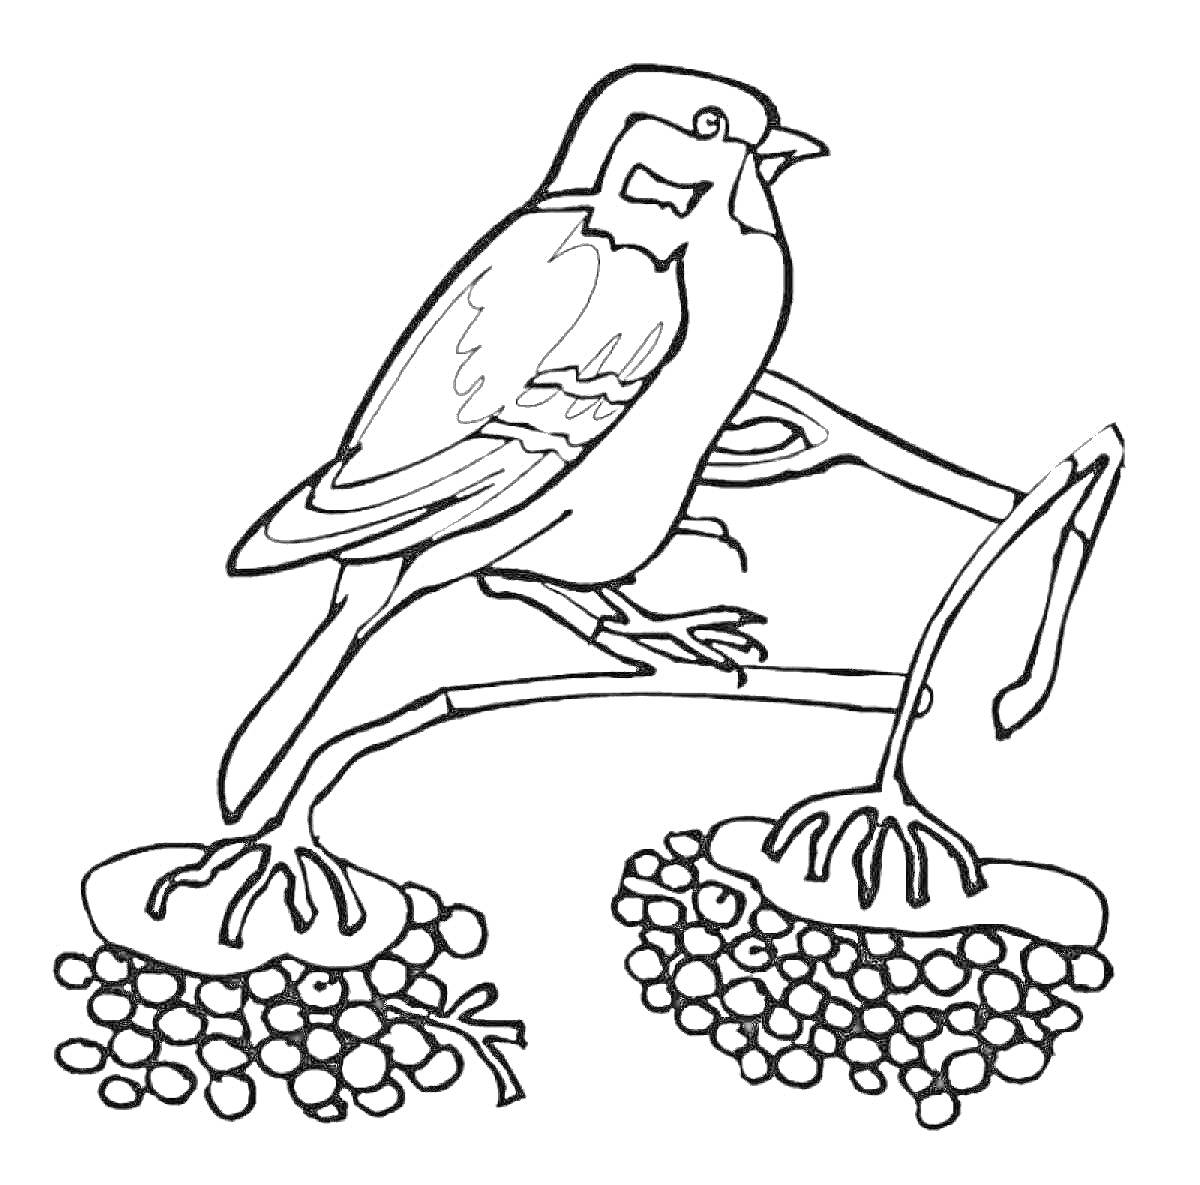 Раскраска Птица на ветке с кормушкой из ягод